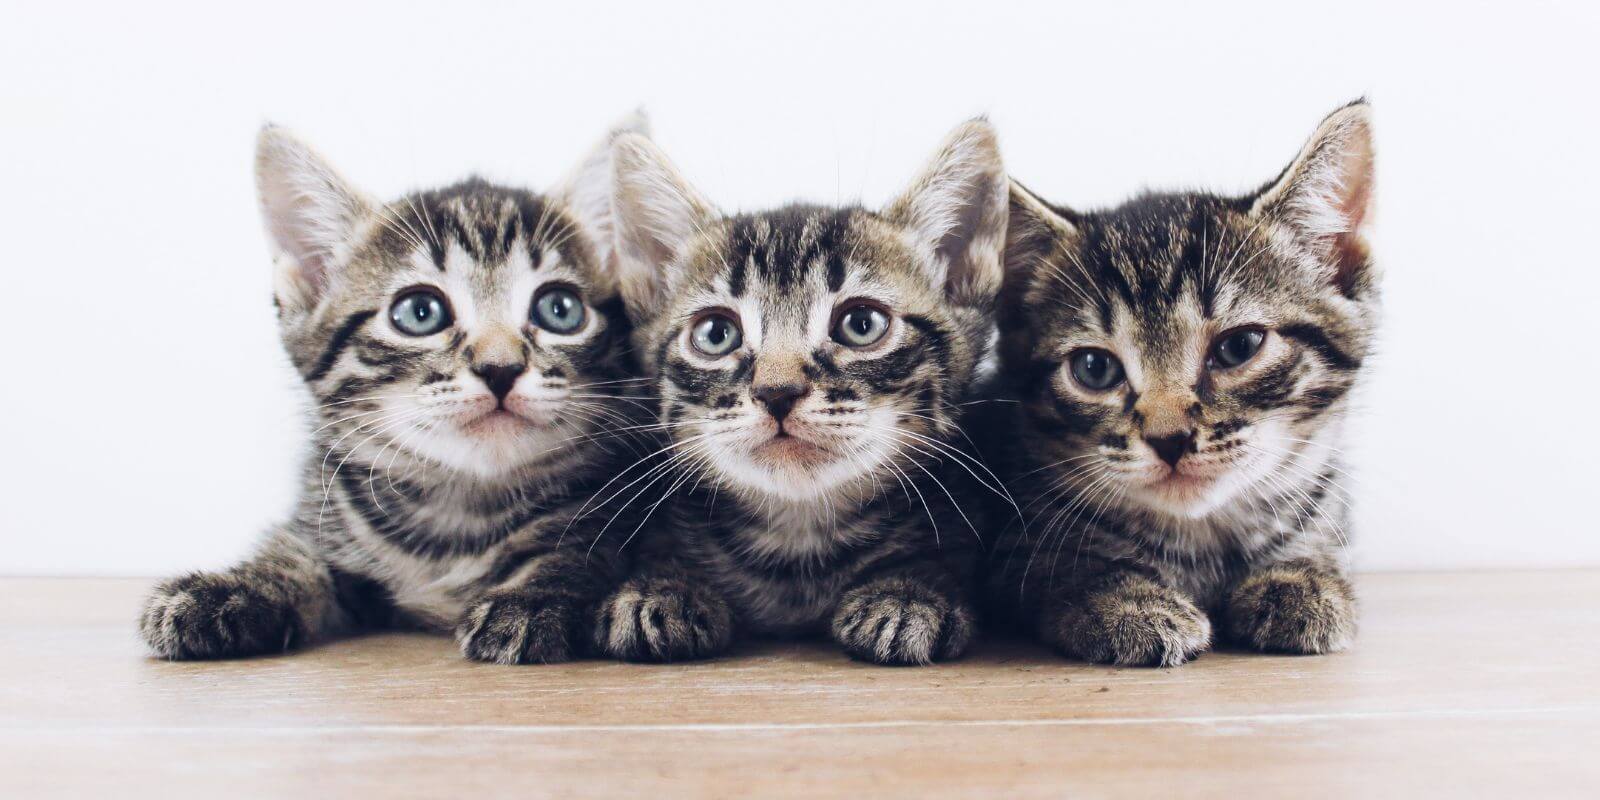 Three salt and pepper kittens lying on a wooden floor